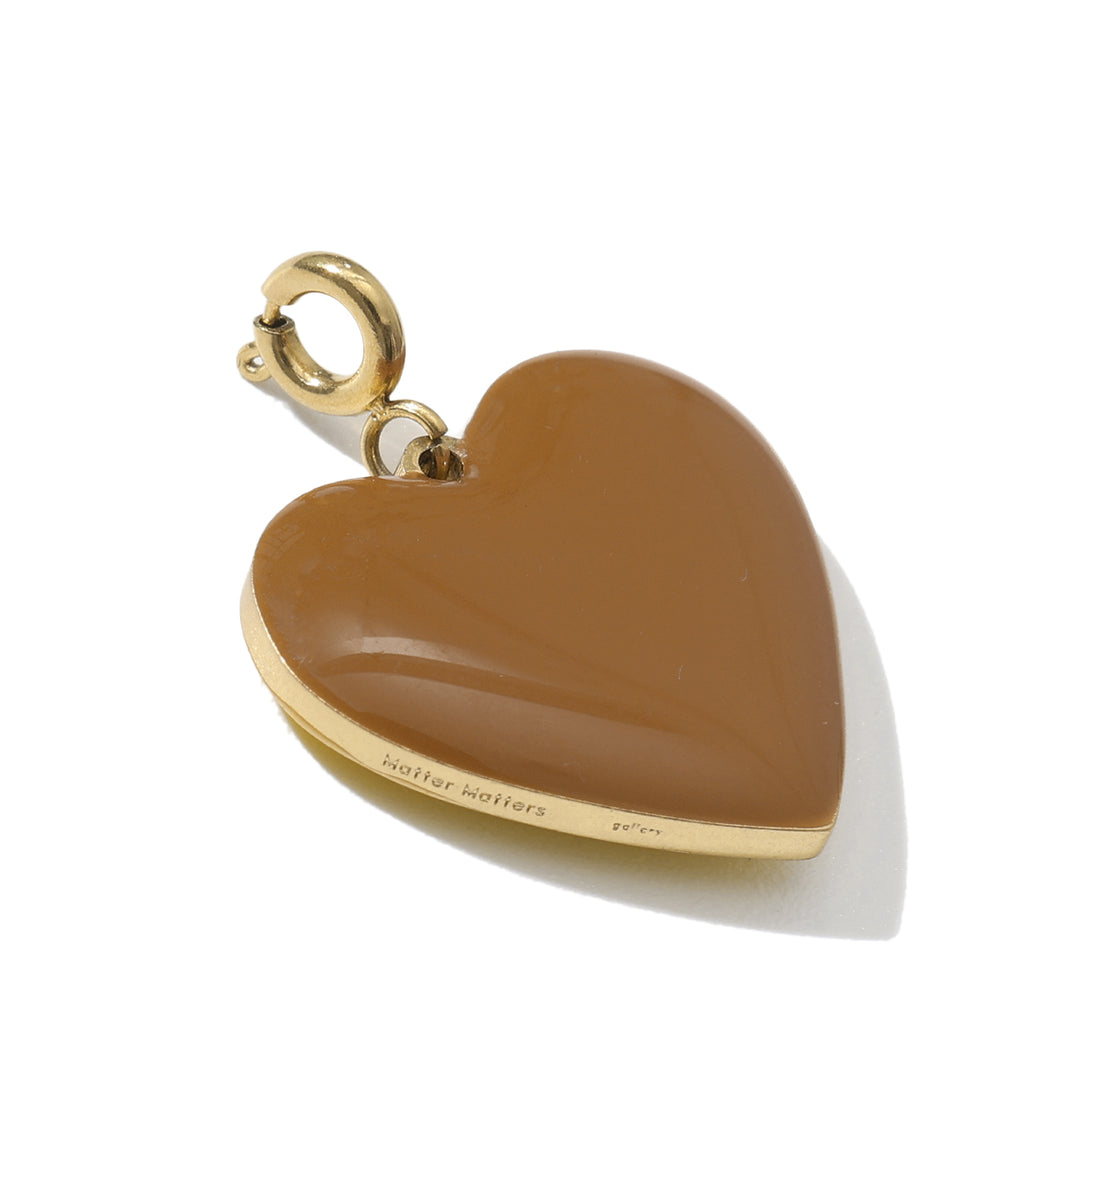 Set Your Heart Pendant • Cobalt & Chocolate